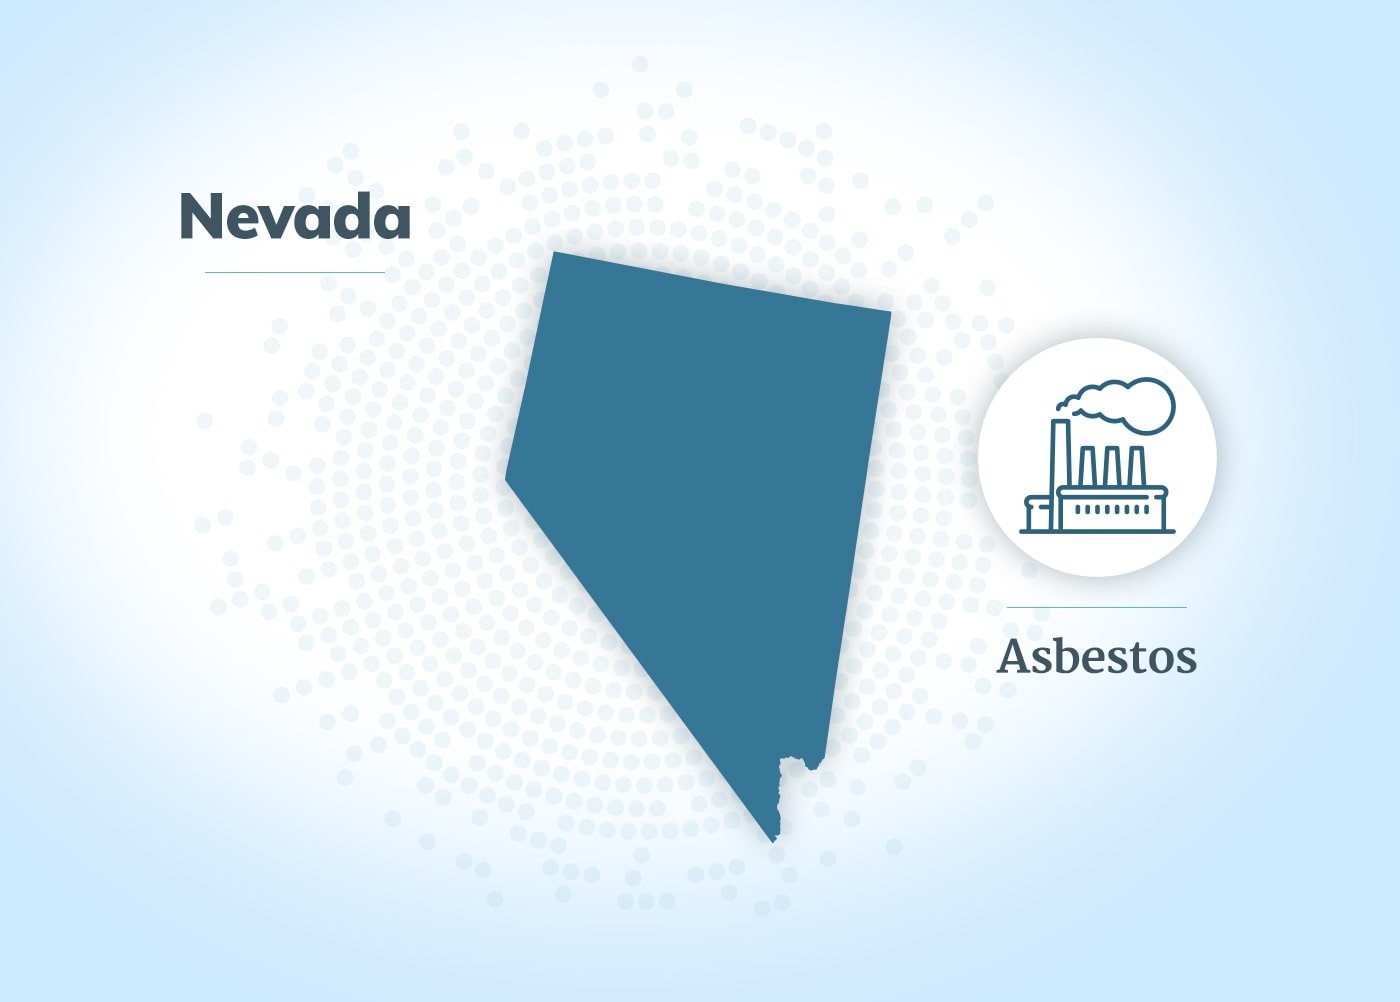 Asbestos exposure in Nevada